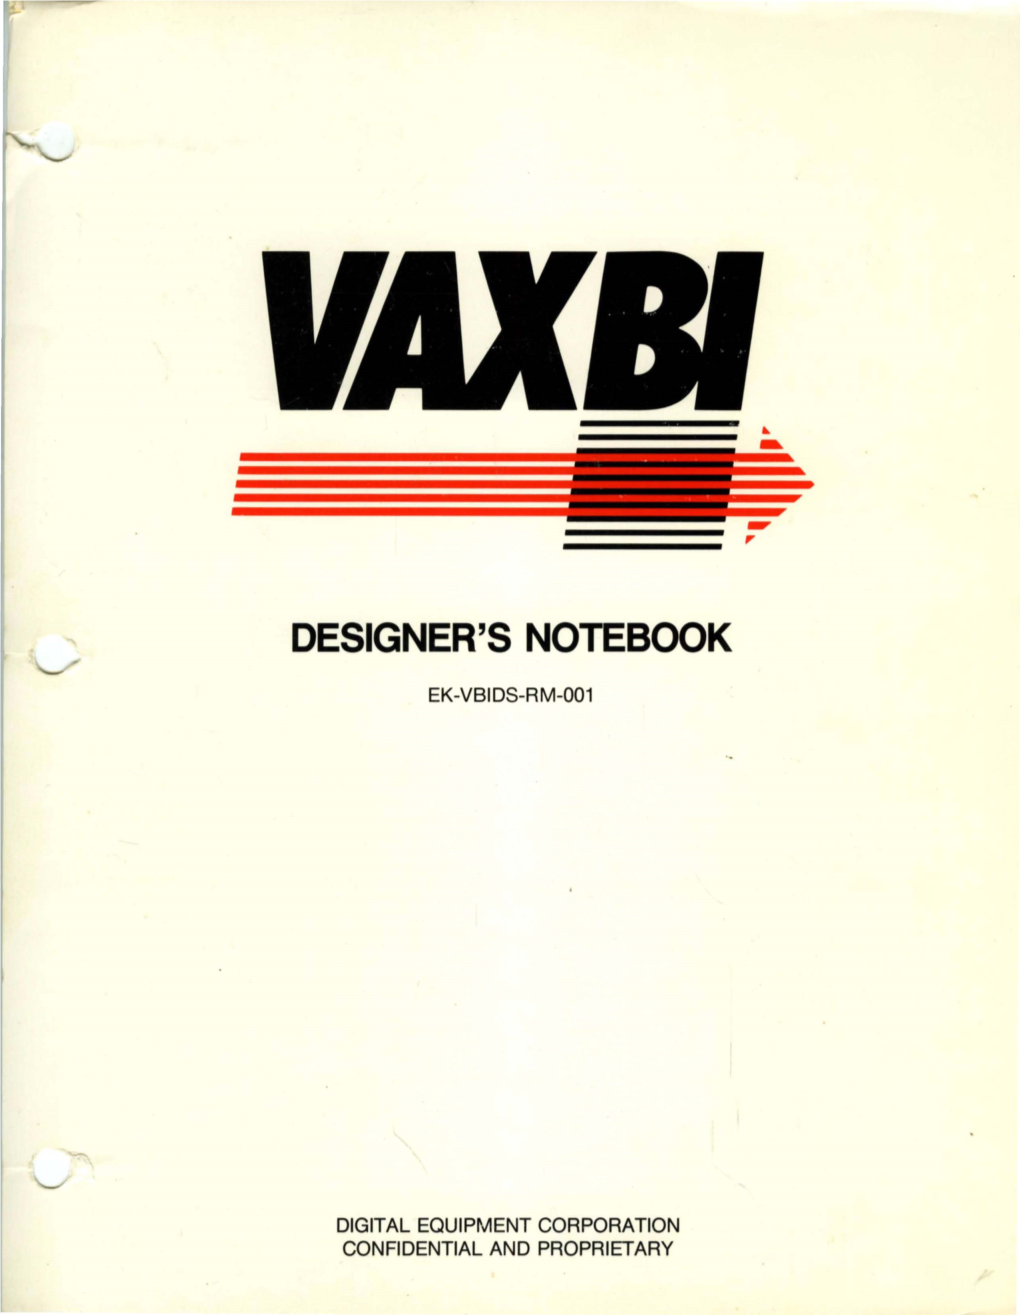 Designer's Notebook